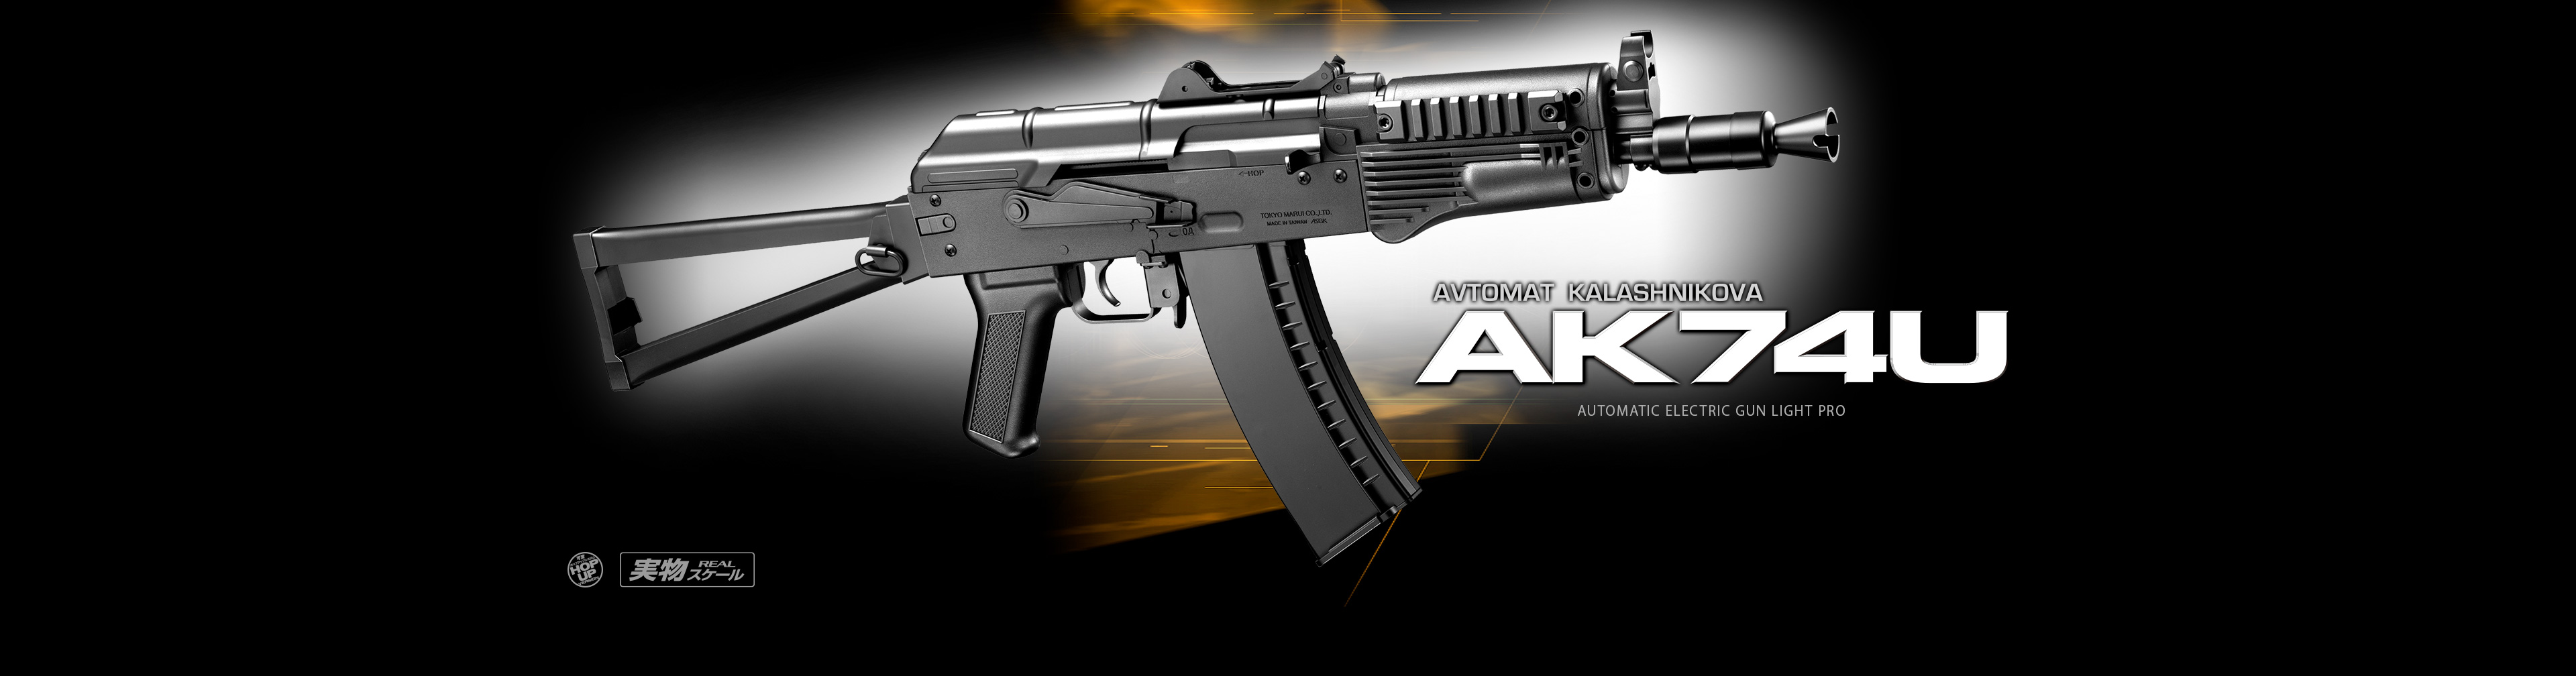 AK74U - 電動ガンLIGHT PRO | 東京マルイ エアソフトガン情報サイト